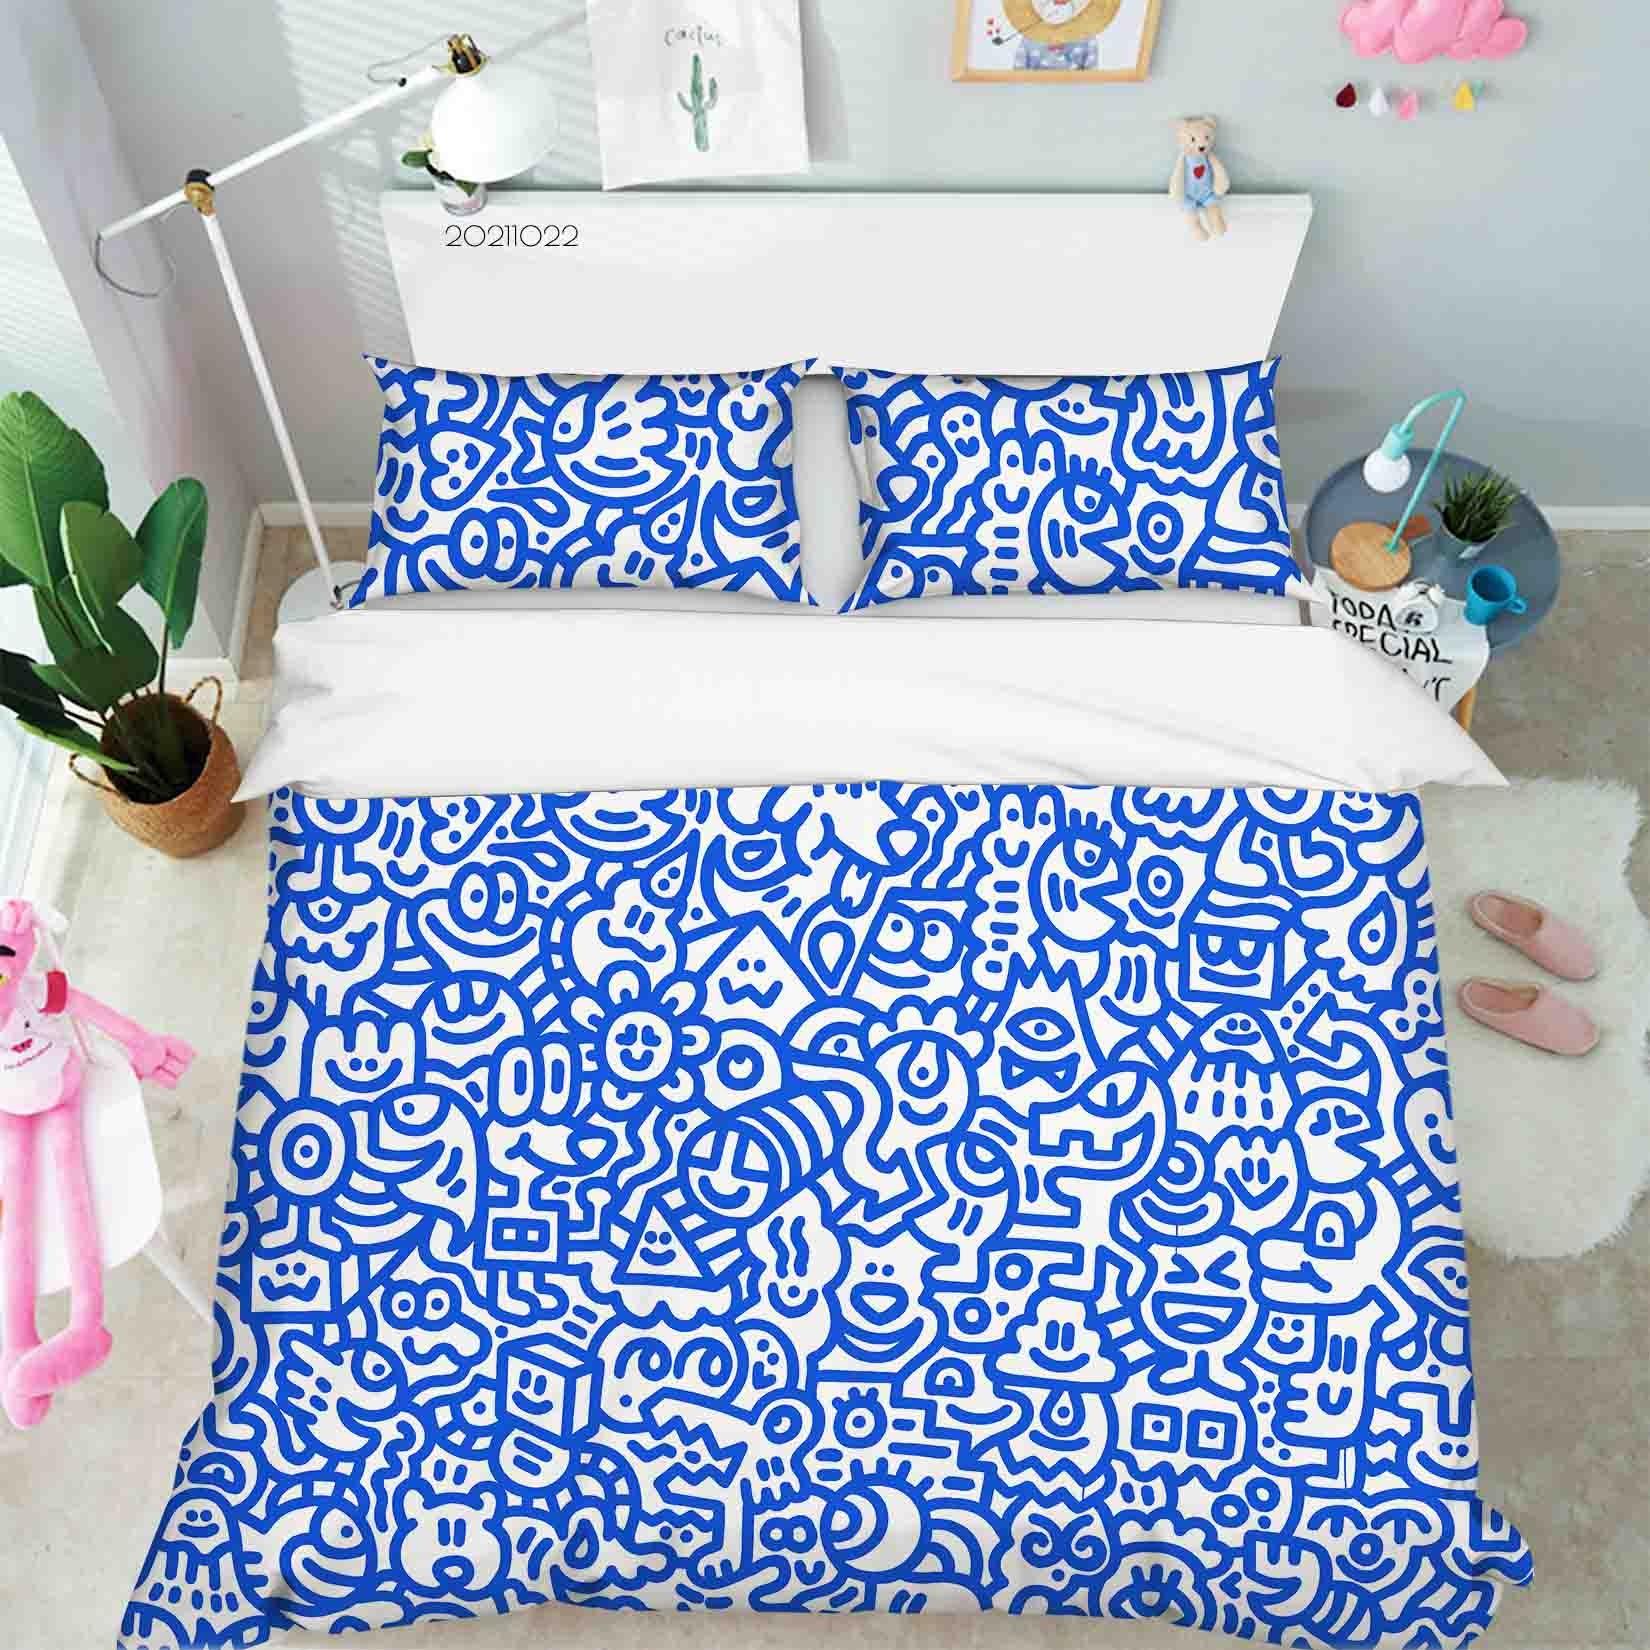 3D Abstract Blue Monster Graffiti Quilt Cover Set Bedding Set Duvet Cover Pillowcases 6- Jess Art Decoration